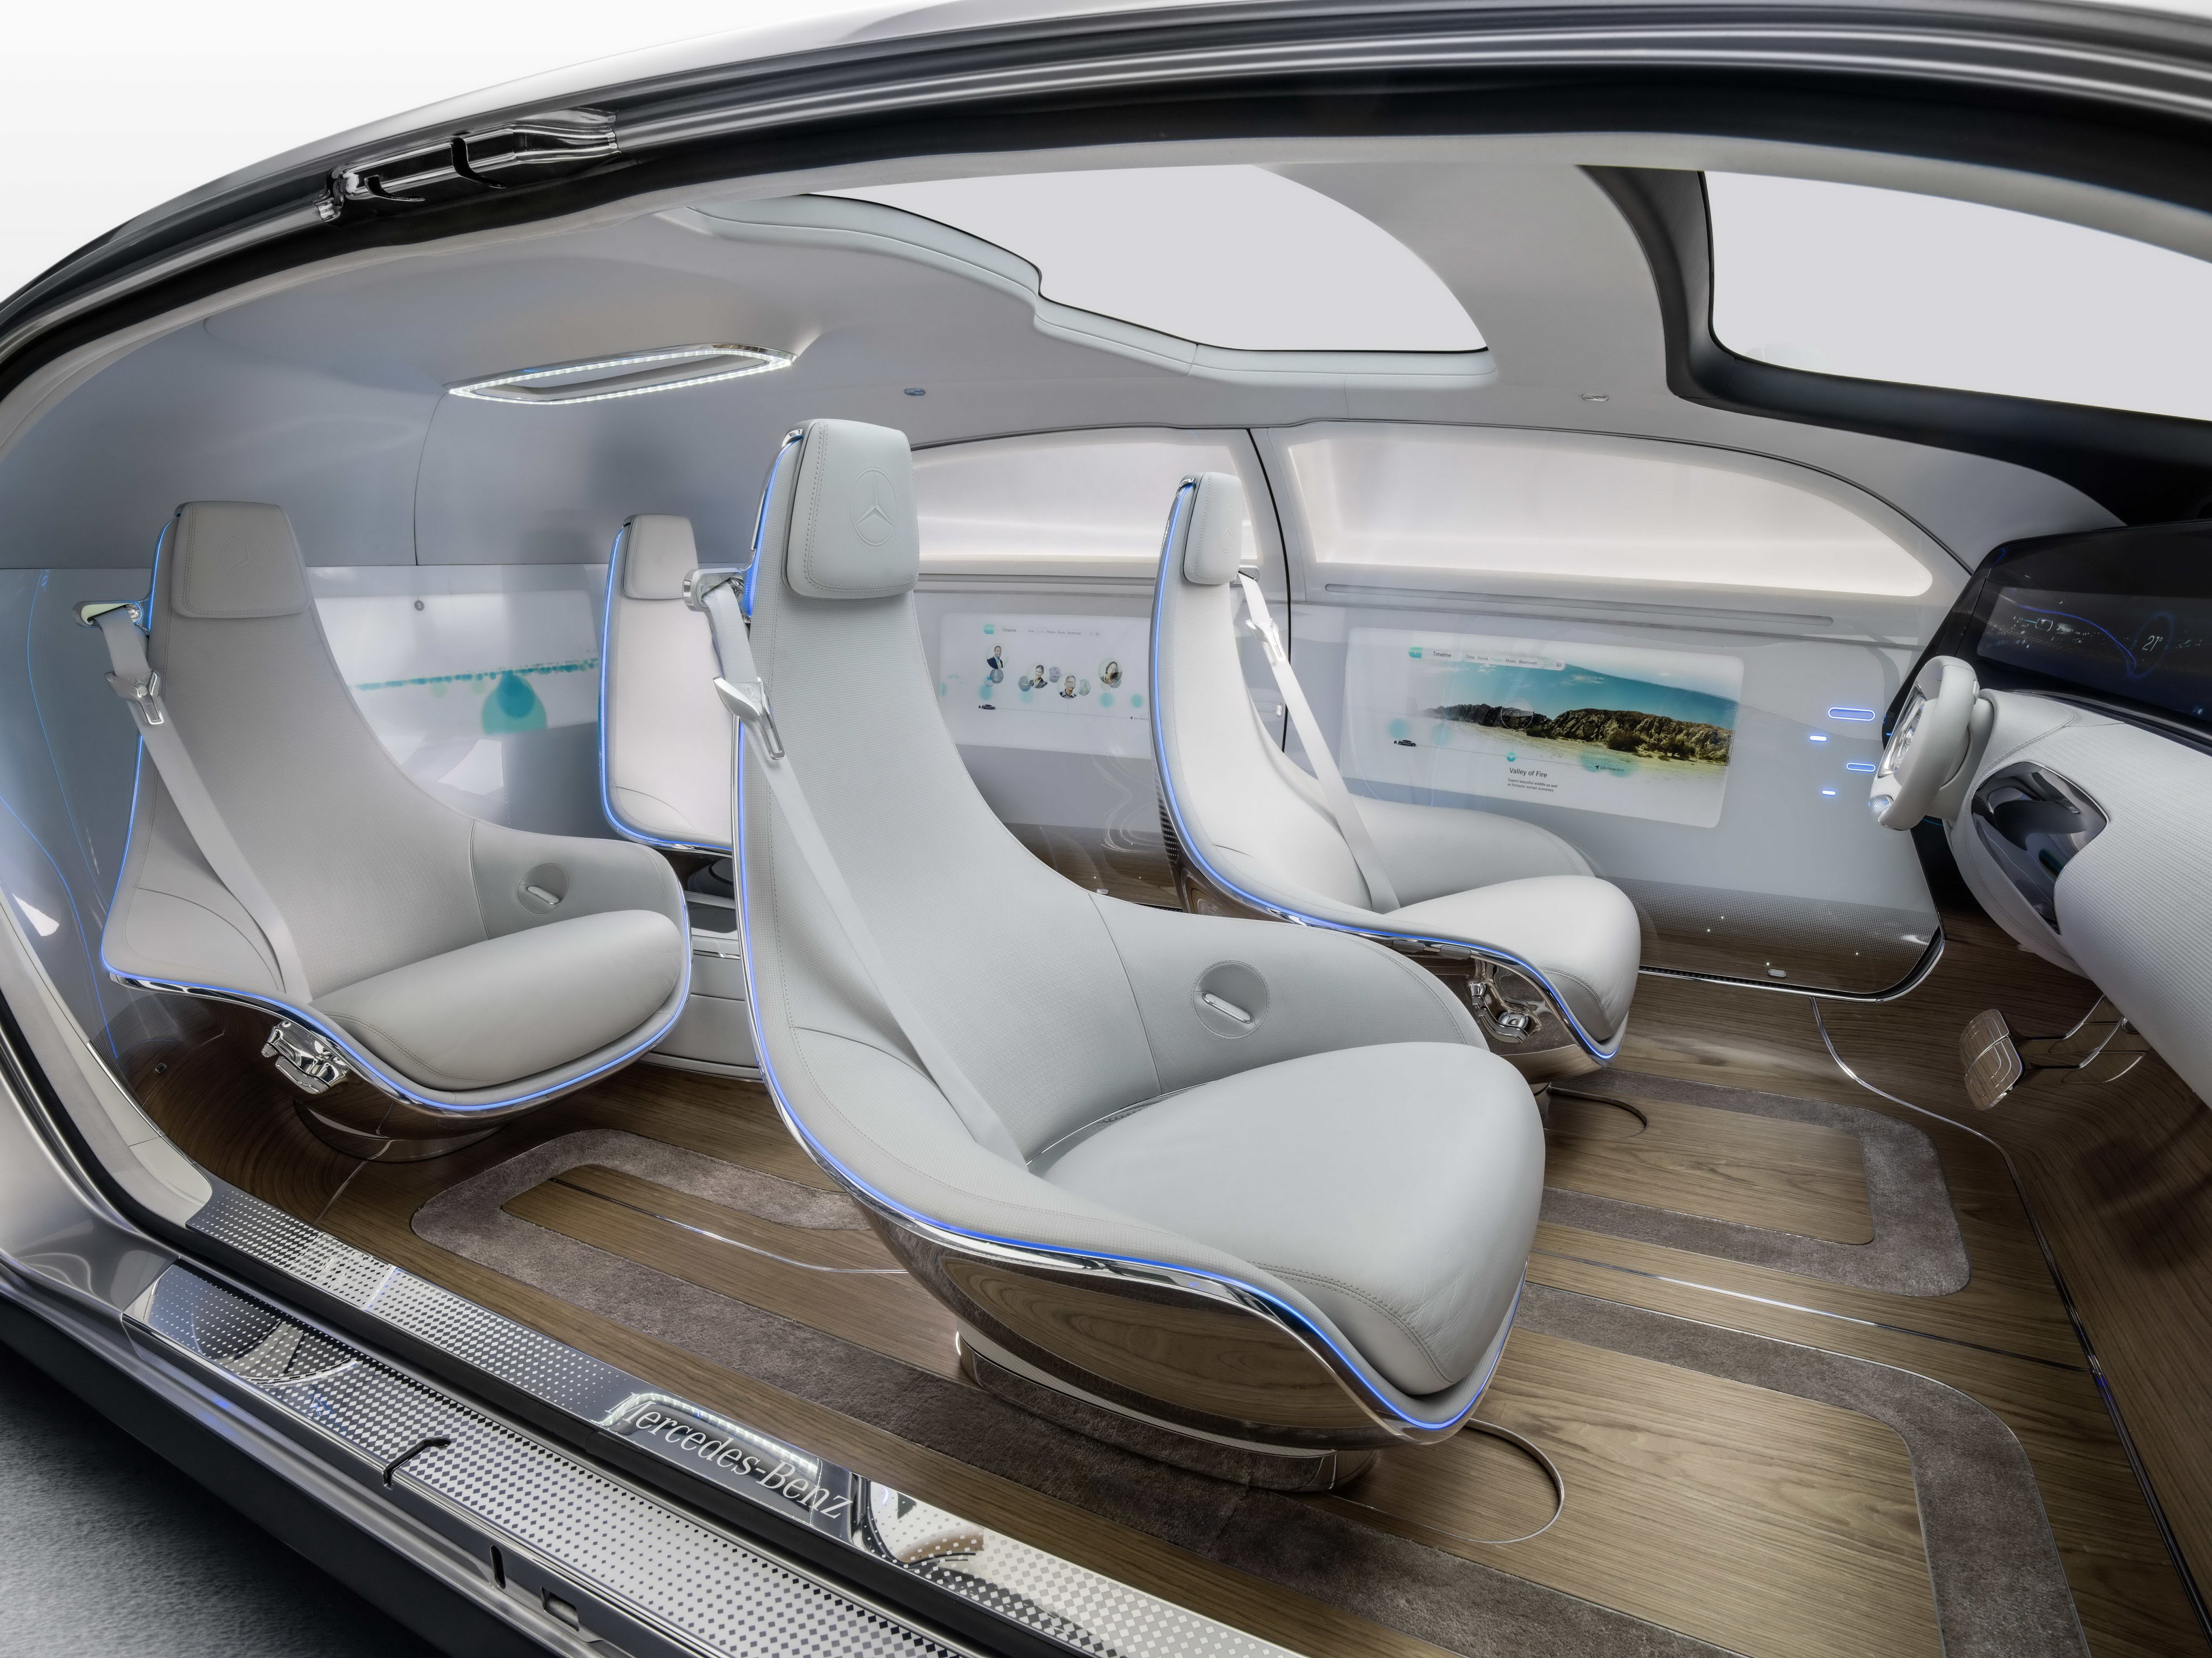 2015, Mercedes, Benz, F015, Luxury, Motion, Electric, Electronic, Technics Wallpaper